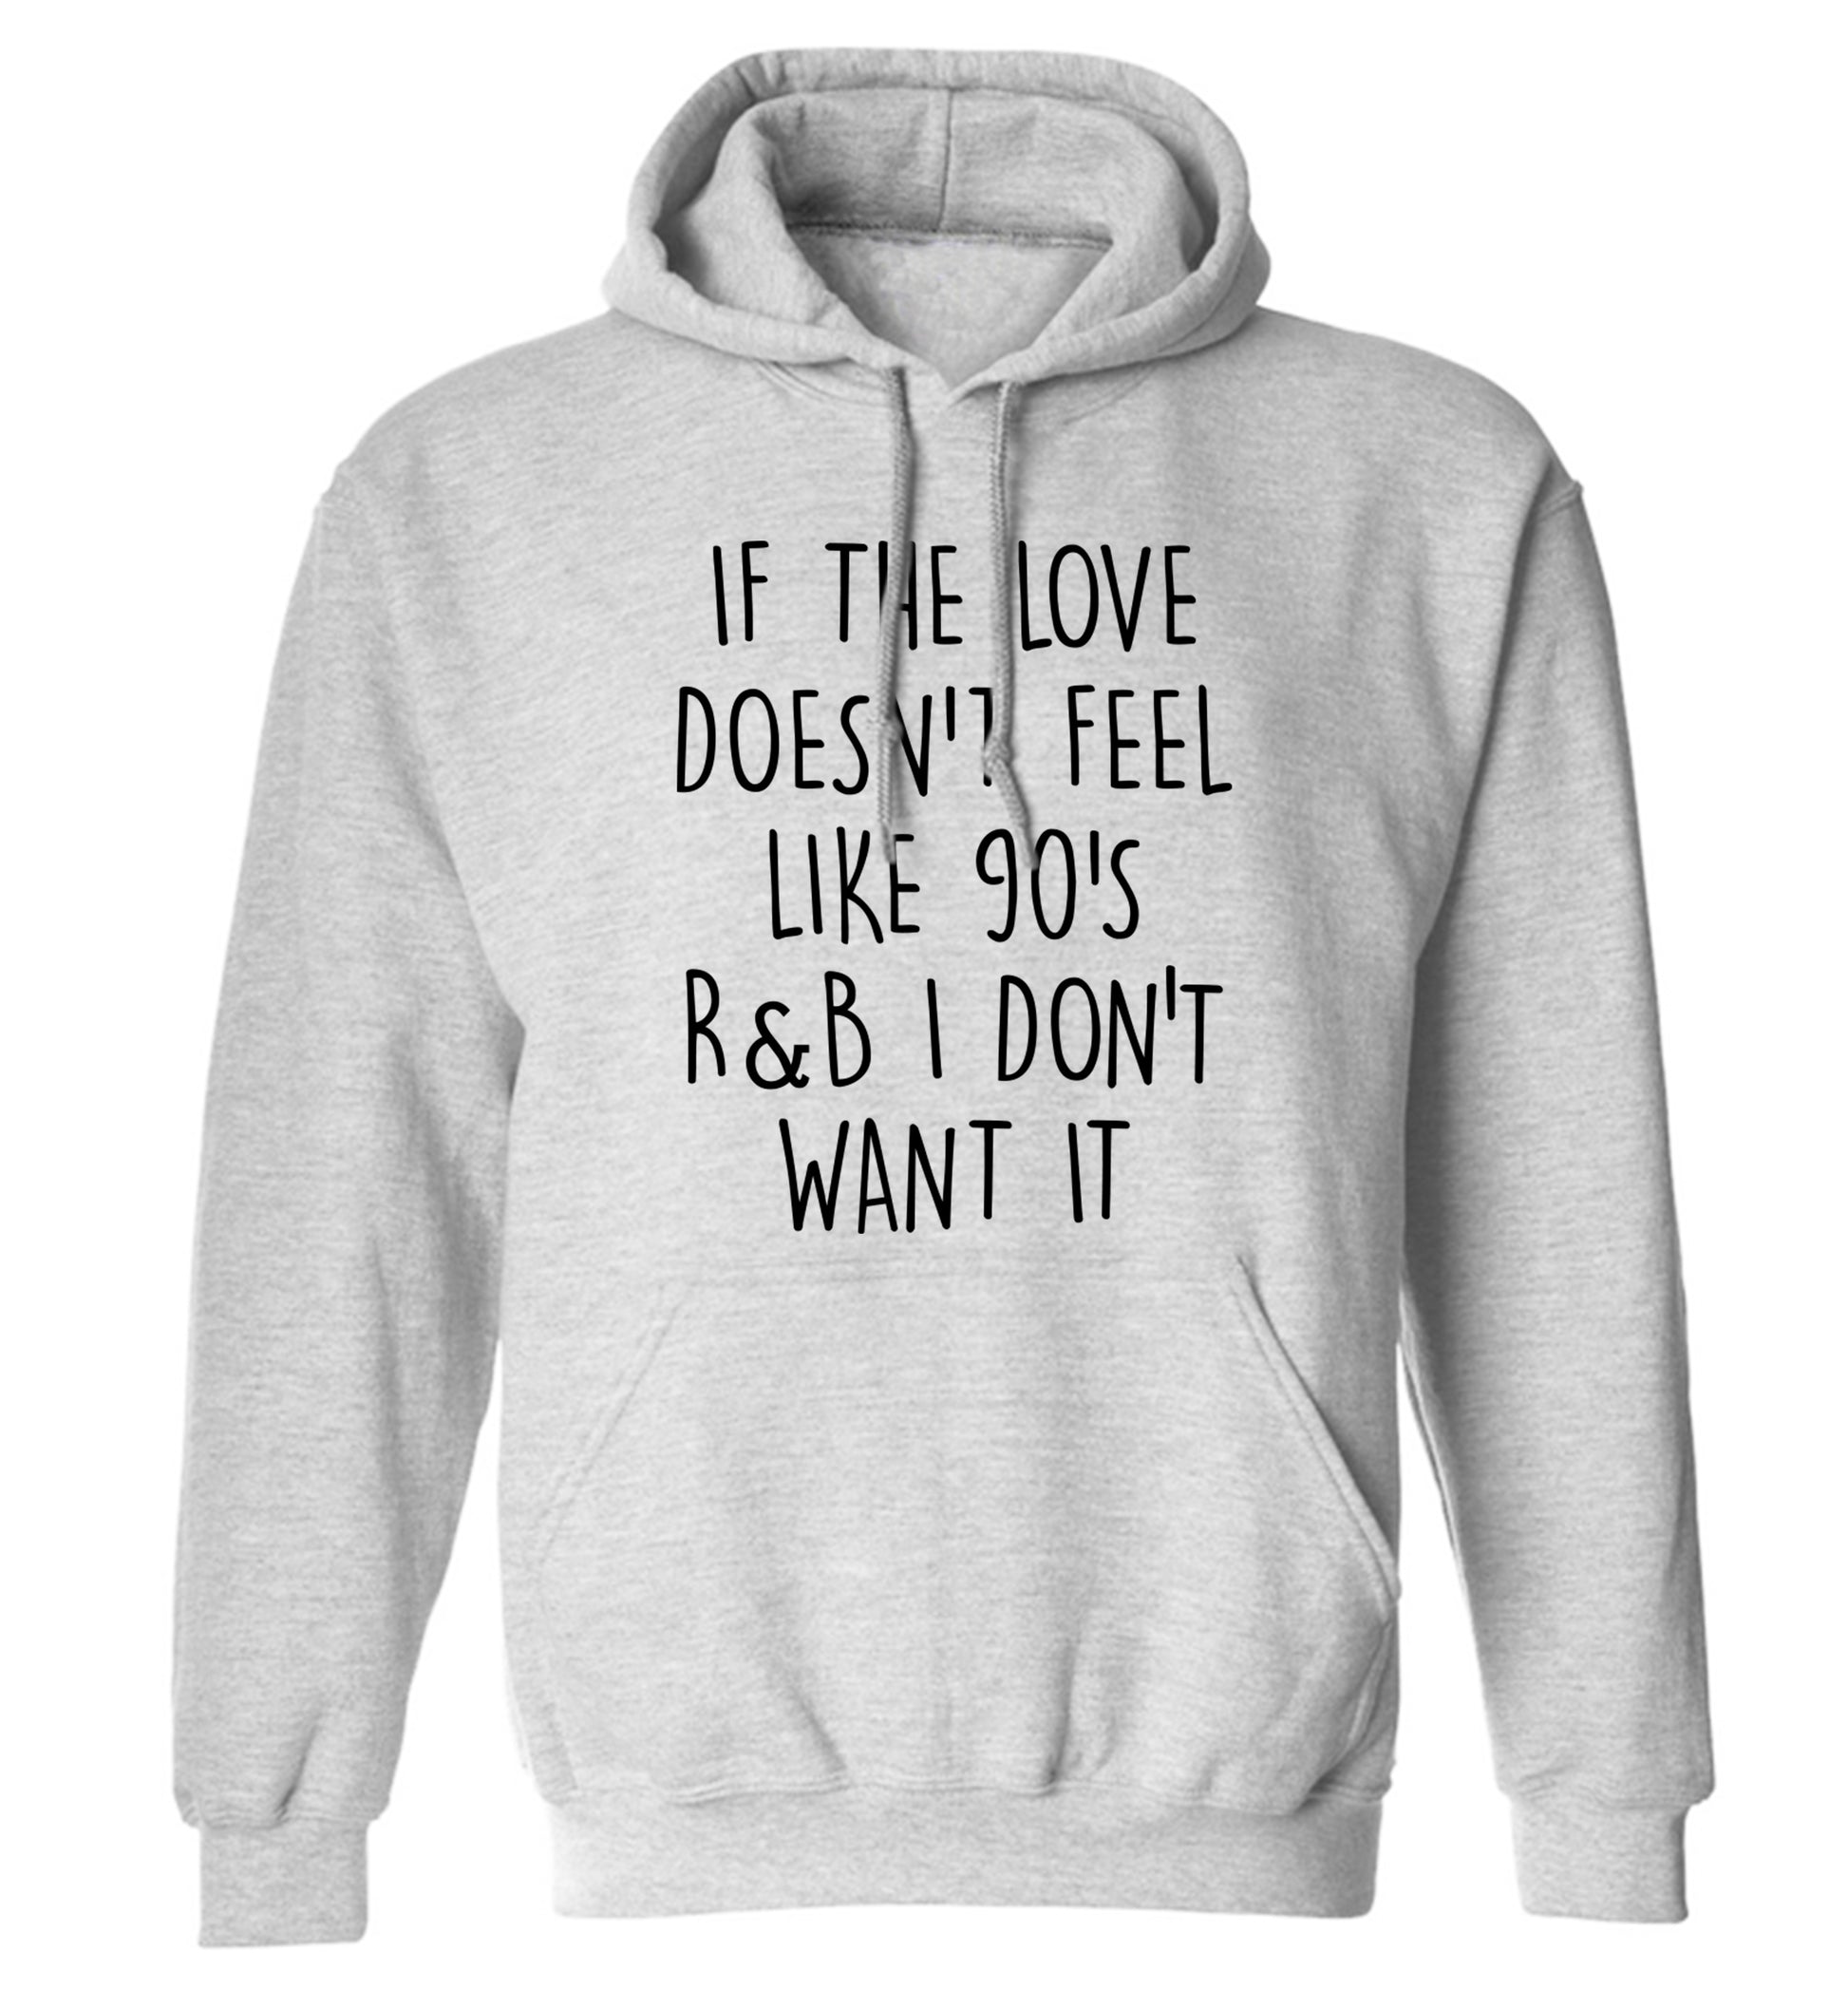 If the love doesn't feel like 90's R&B I don't want it adults unisex grey hoodie 2XL